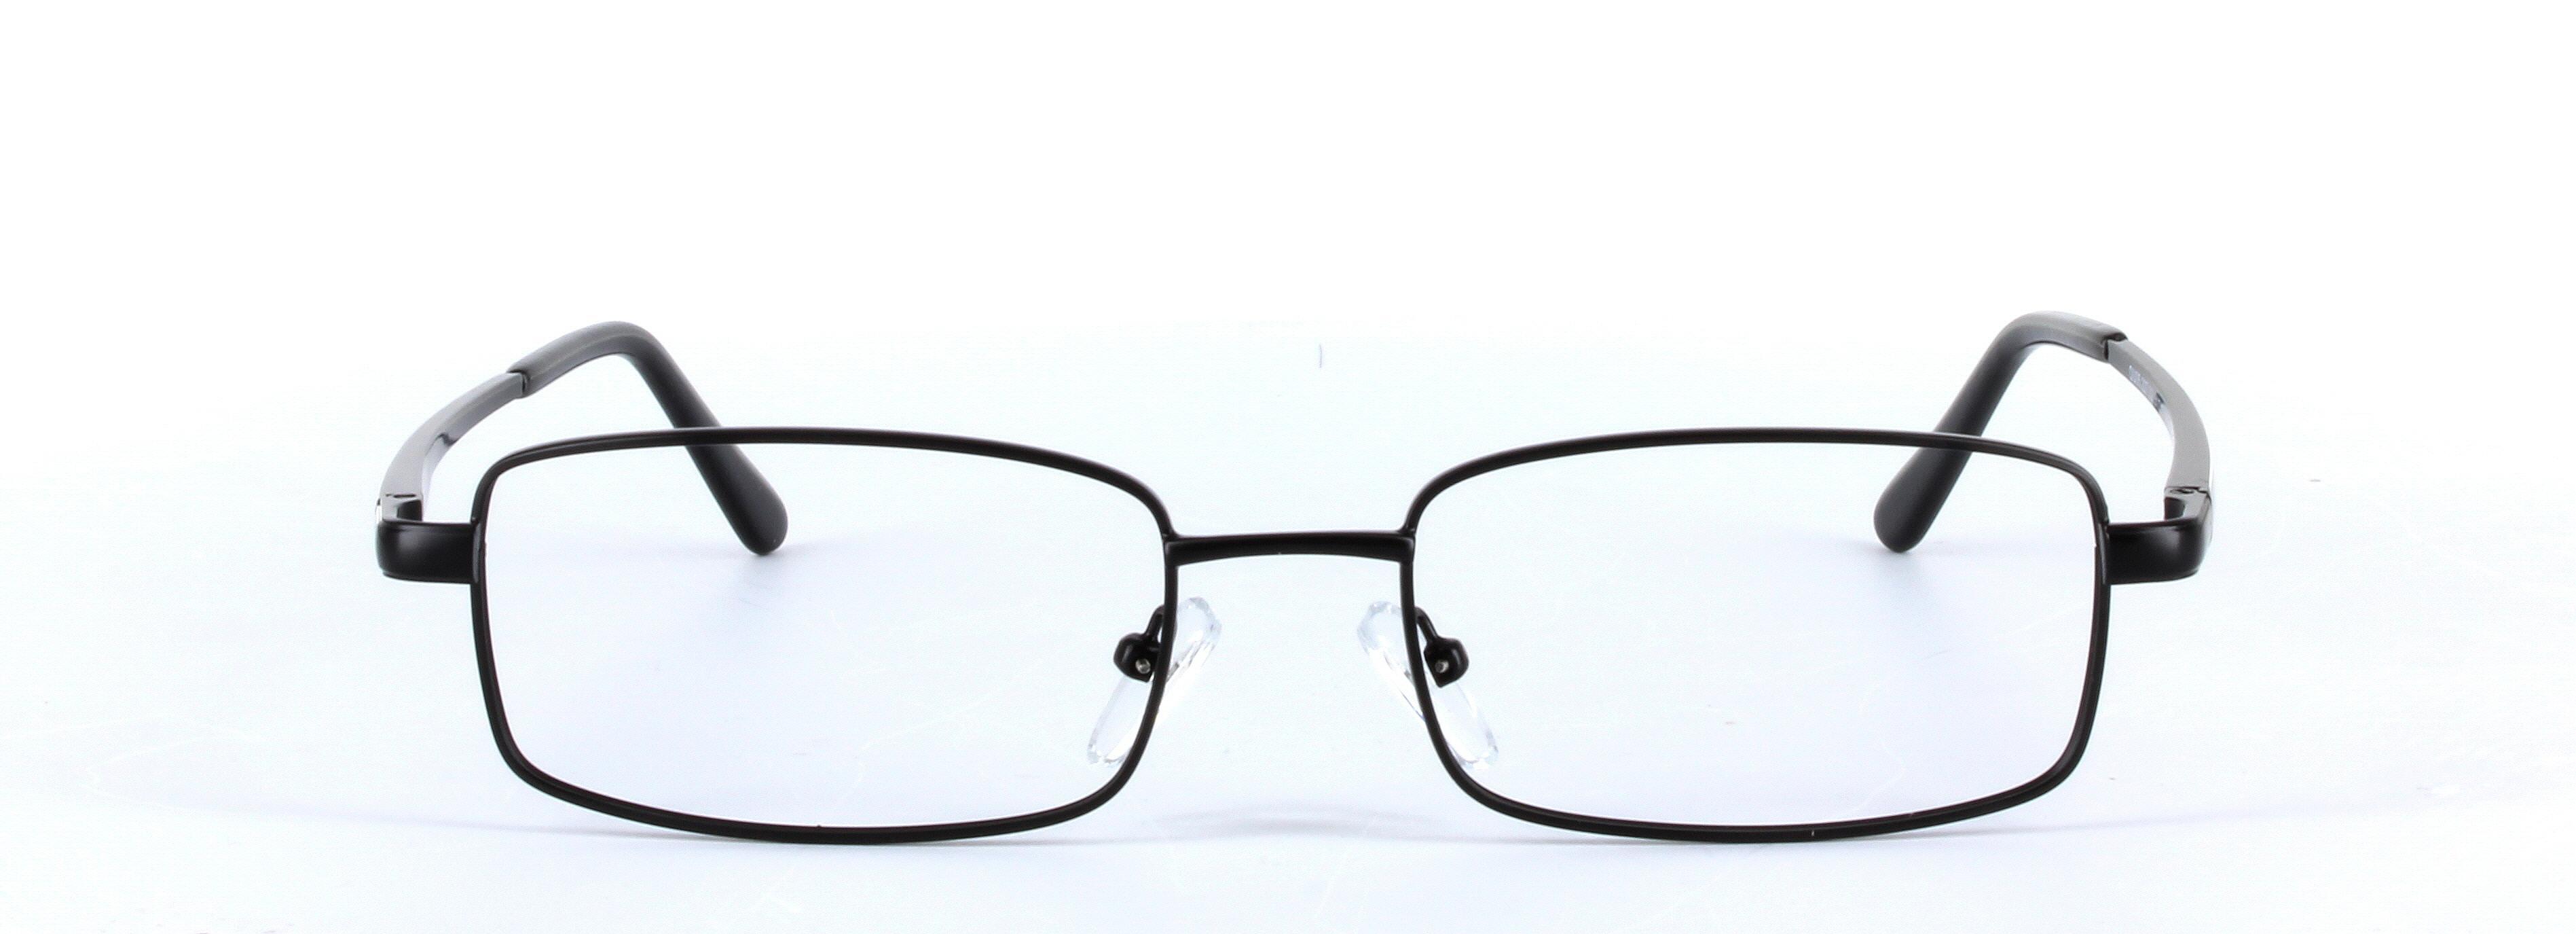 Kriston Black Full Rim Rectangular Metal Glasses - Image View 5